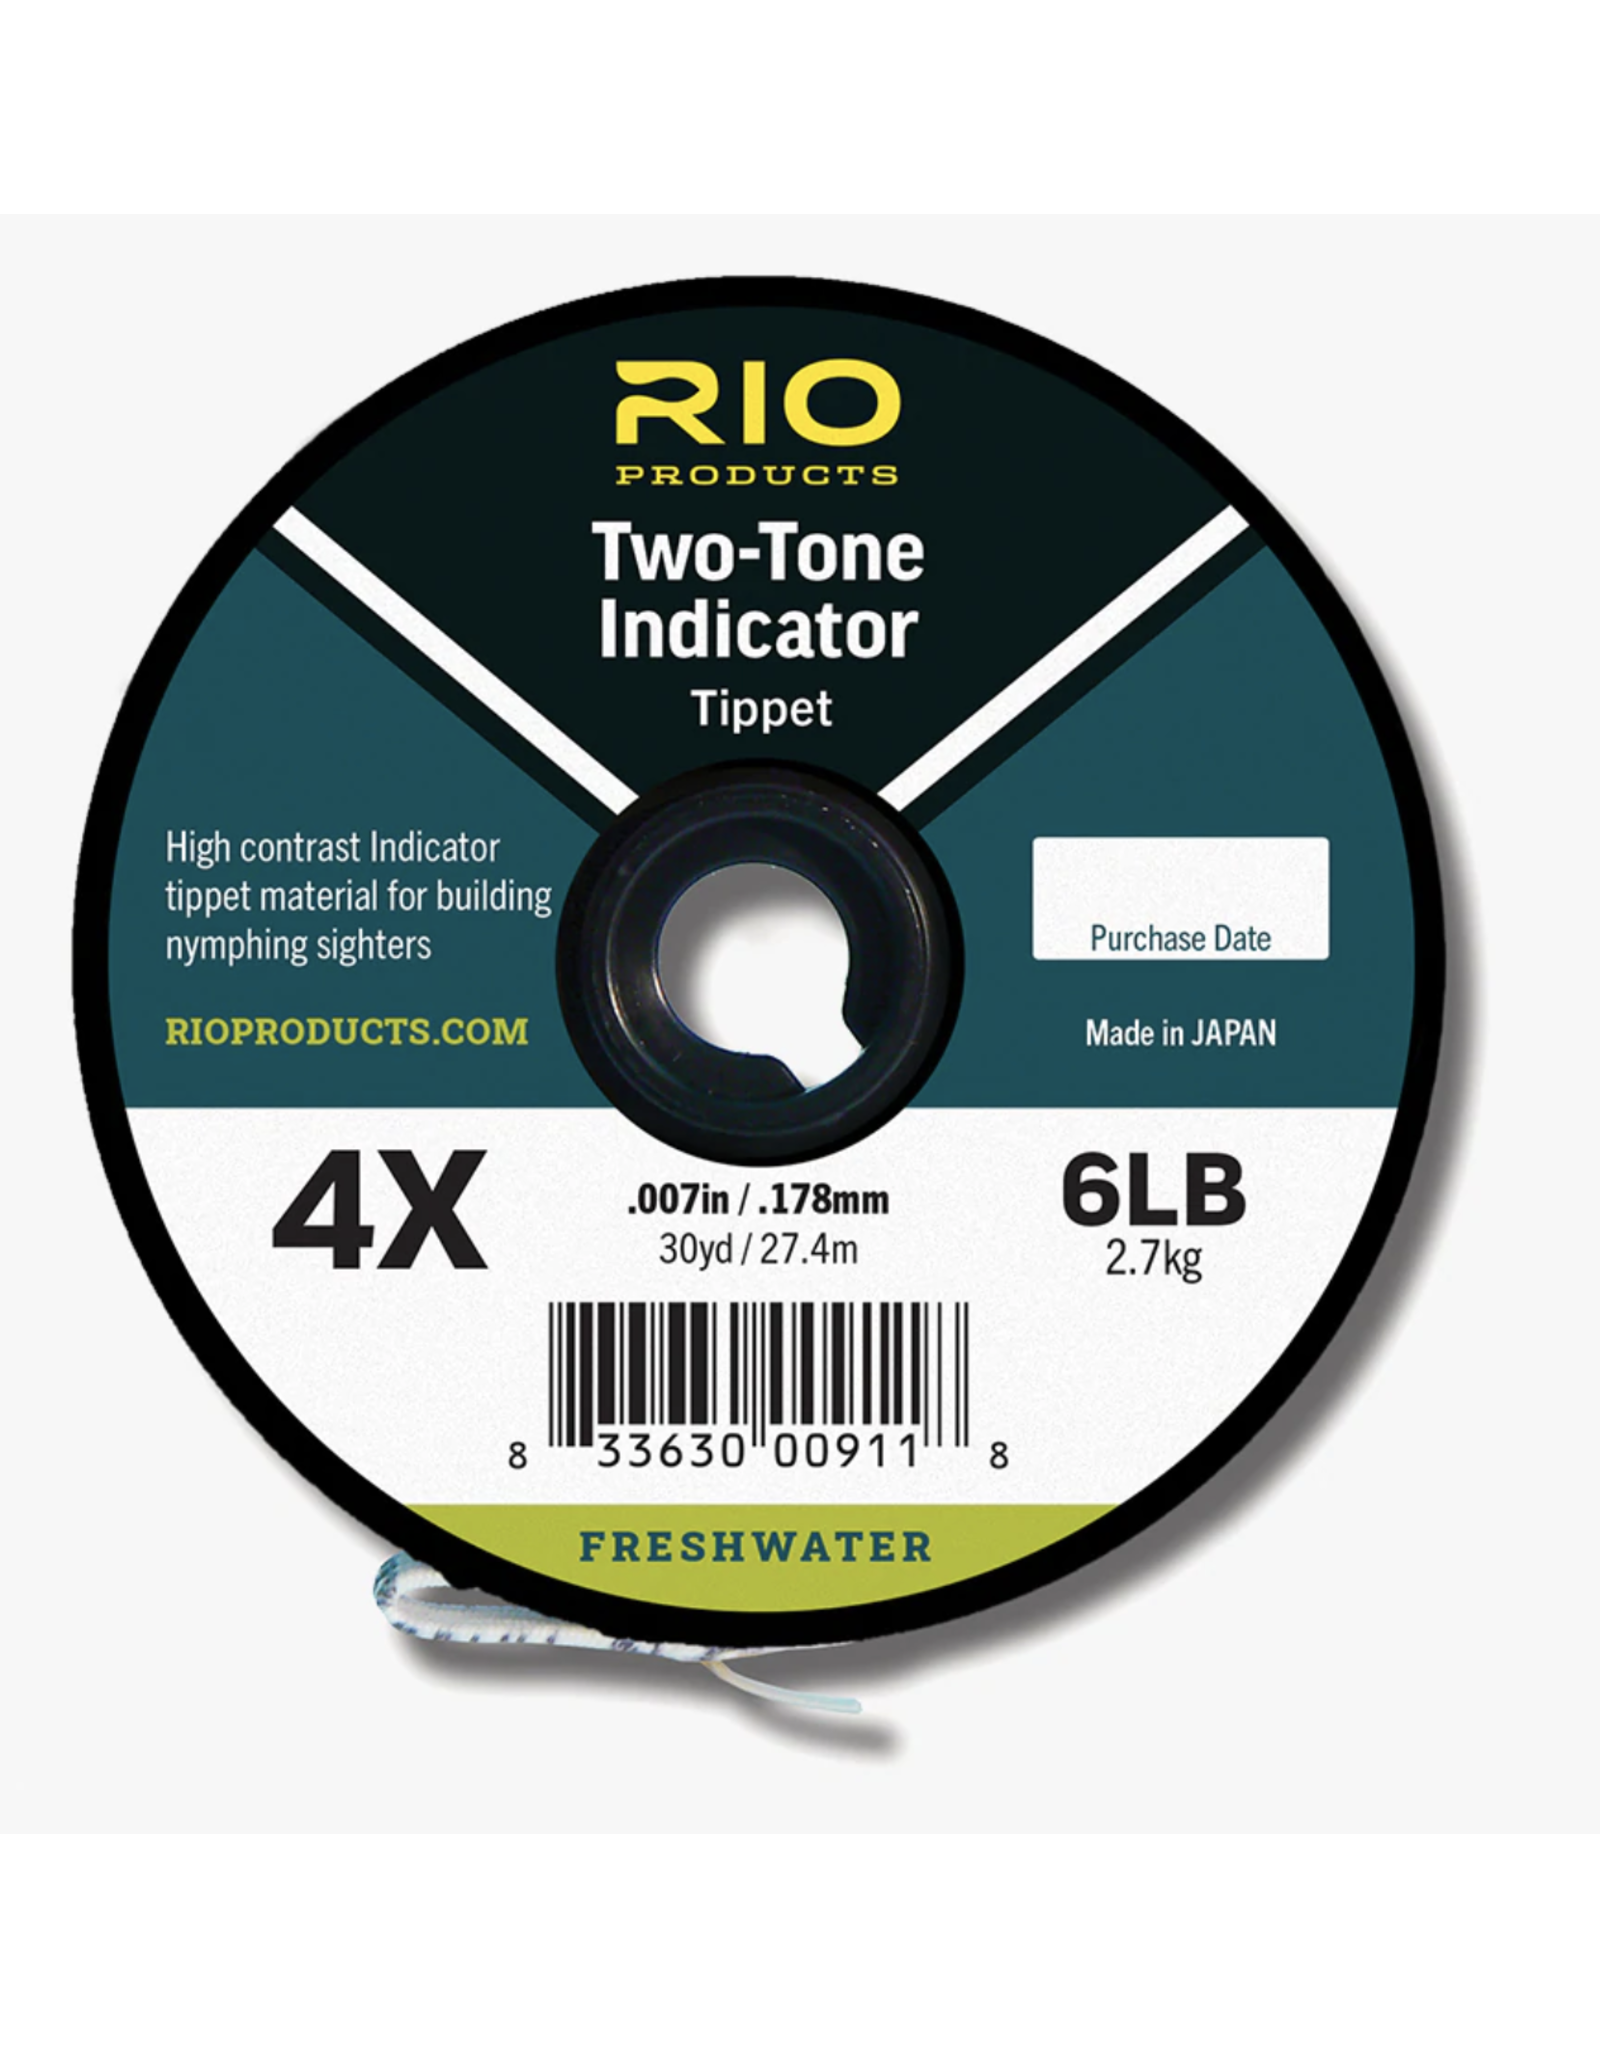 Rio Rio 2-Tone Indicator Tippet